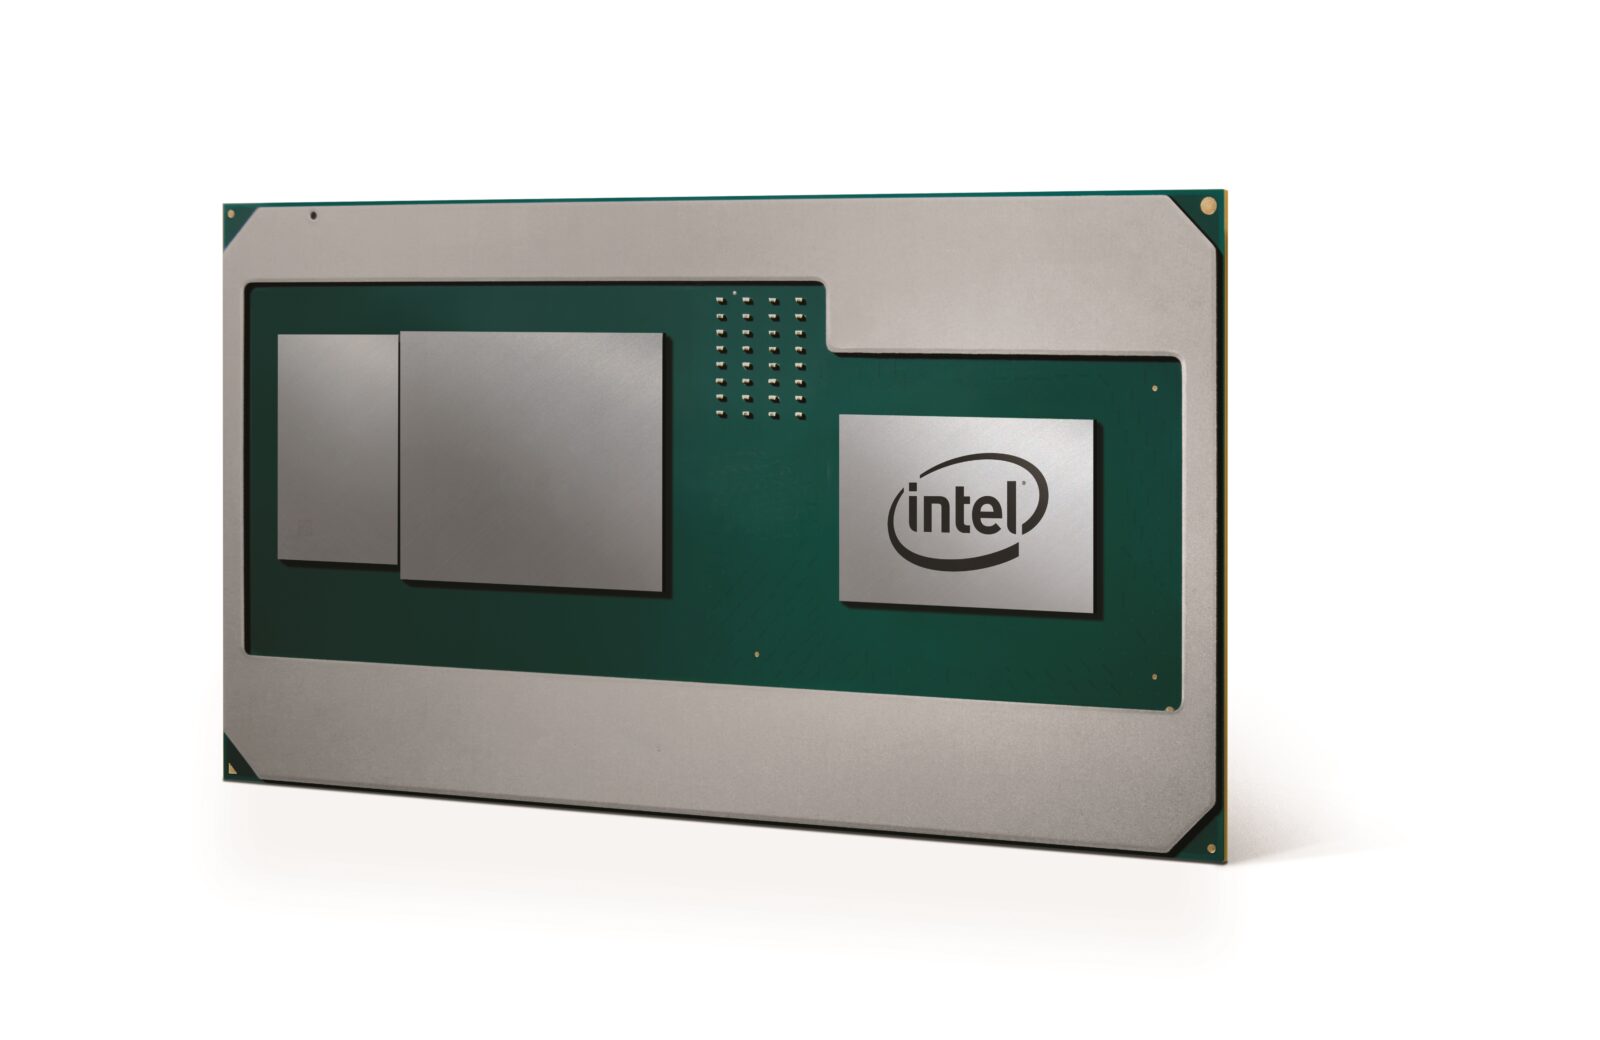 Intel GPU